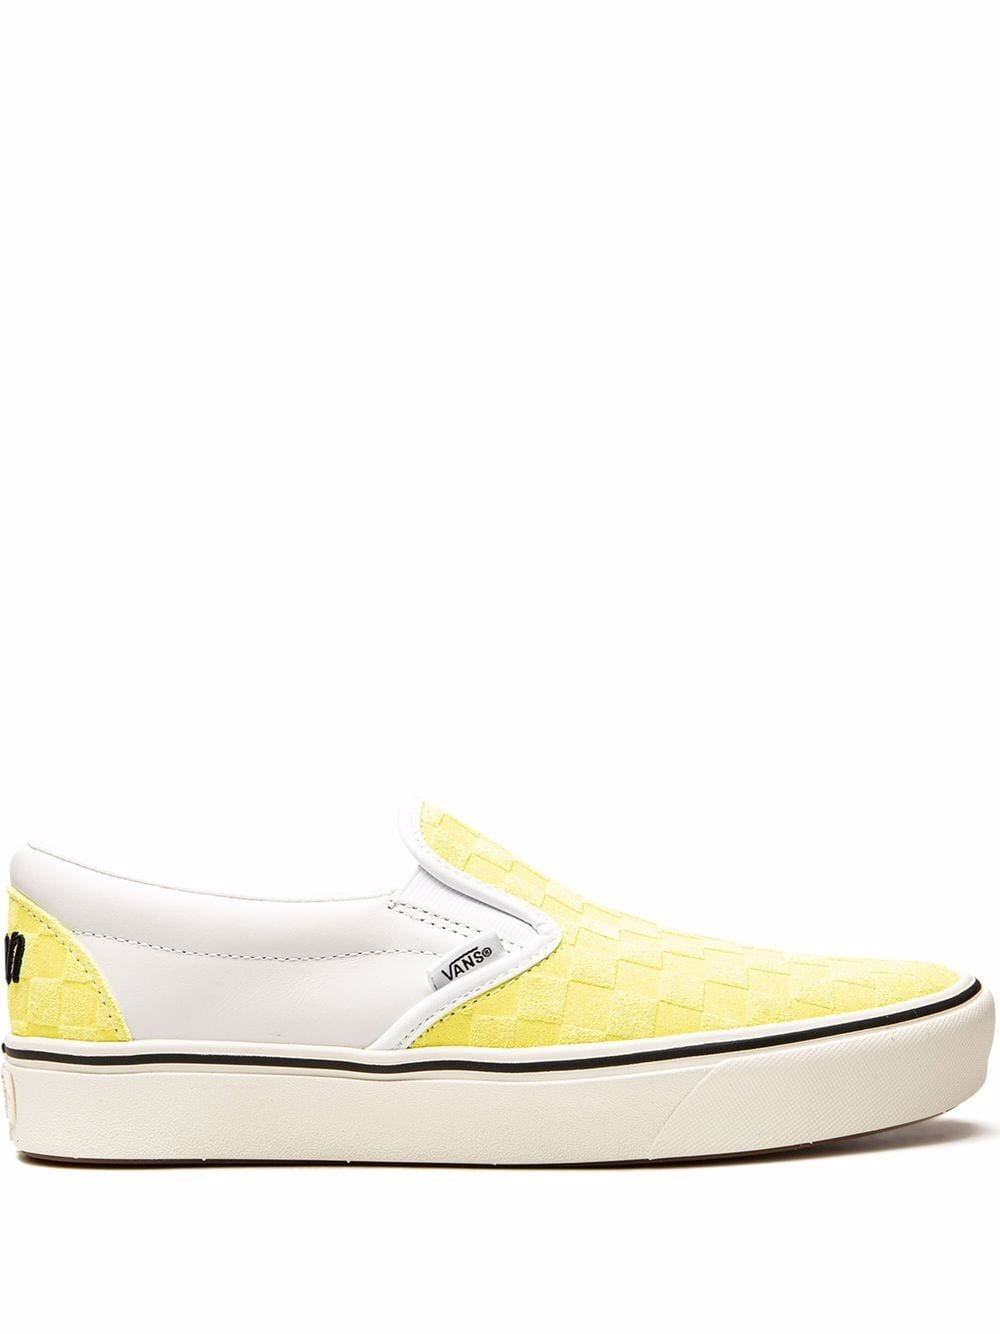 Vans x Penn ComfyCush slip-on sneakers - Yellow von Vans